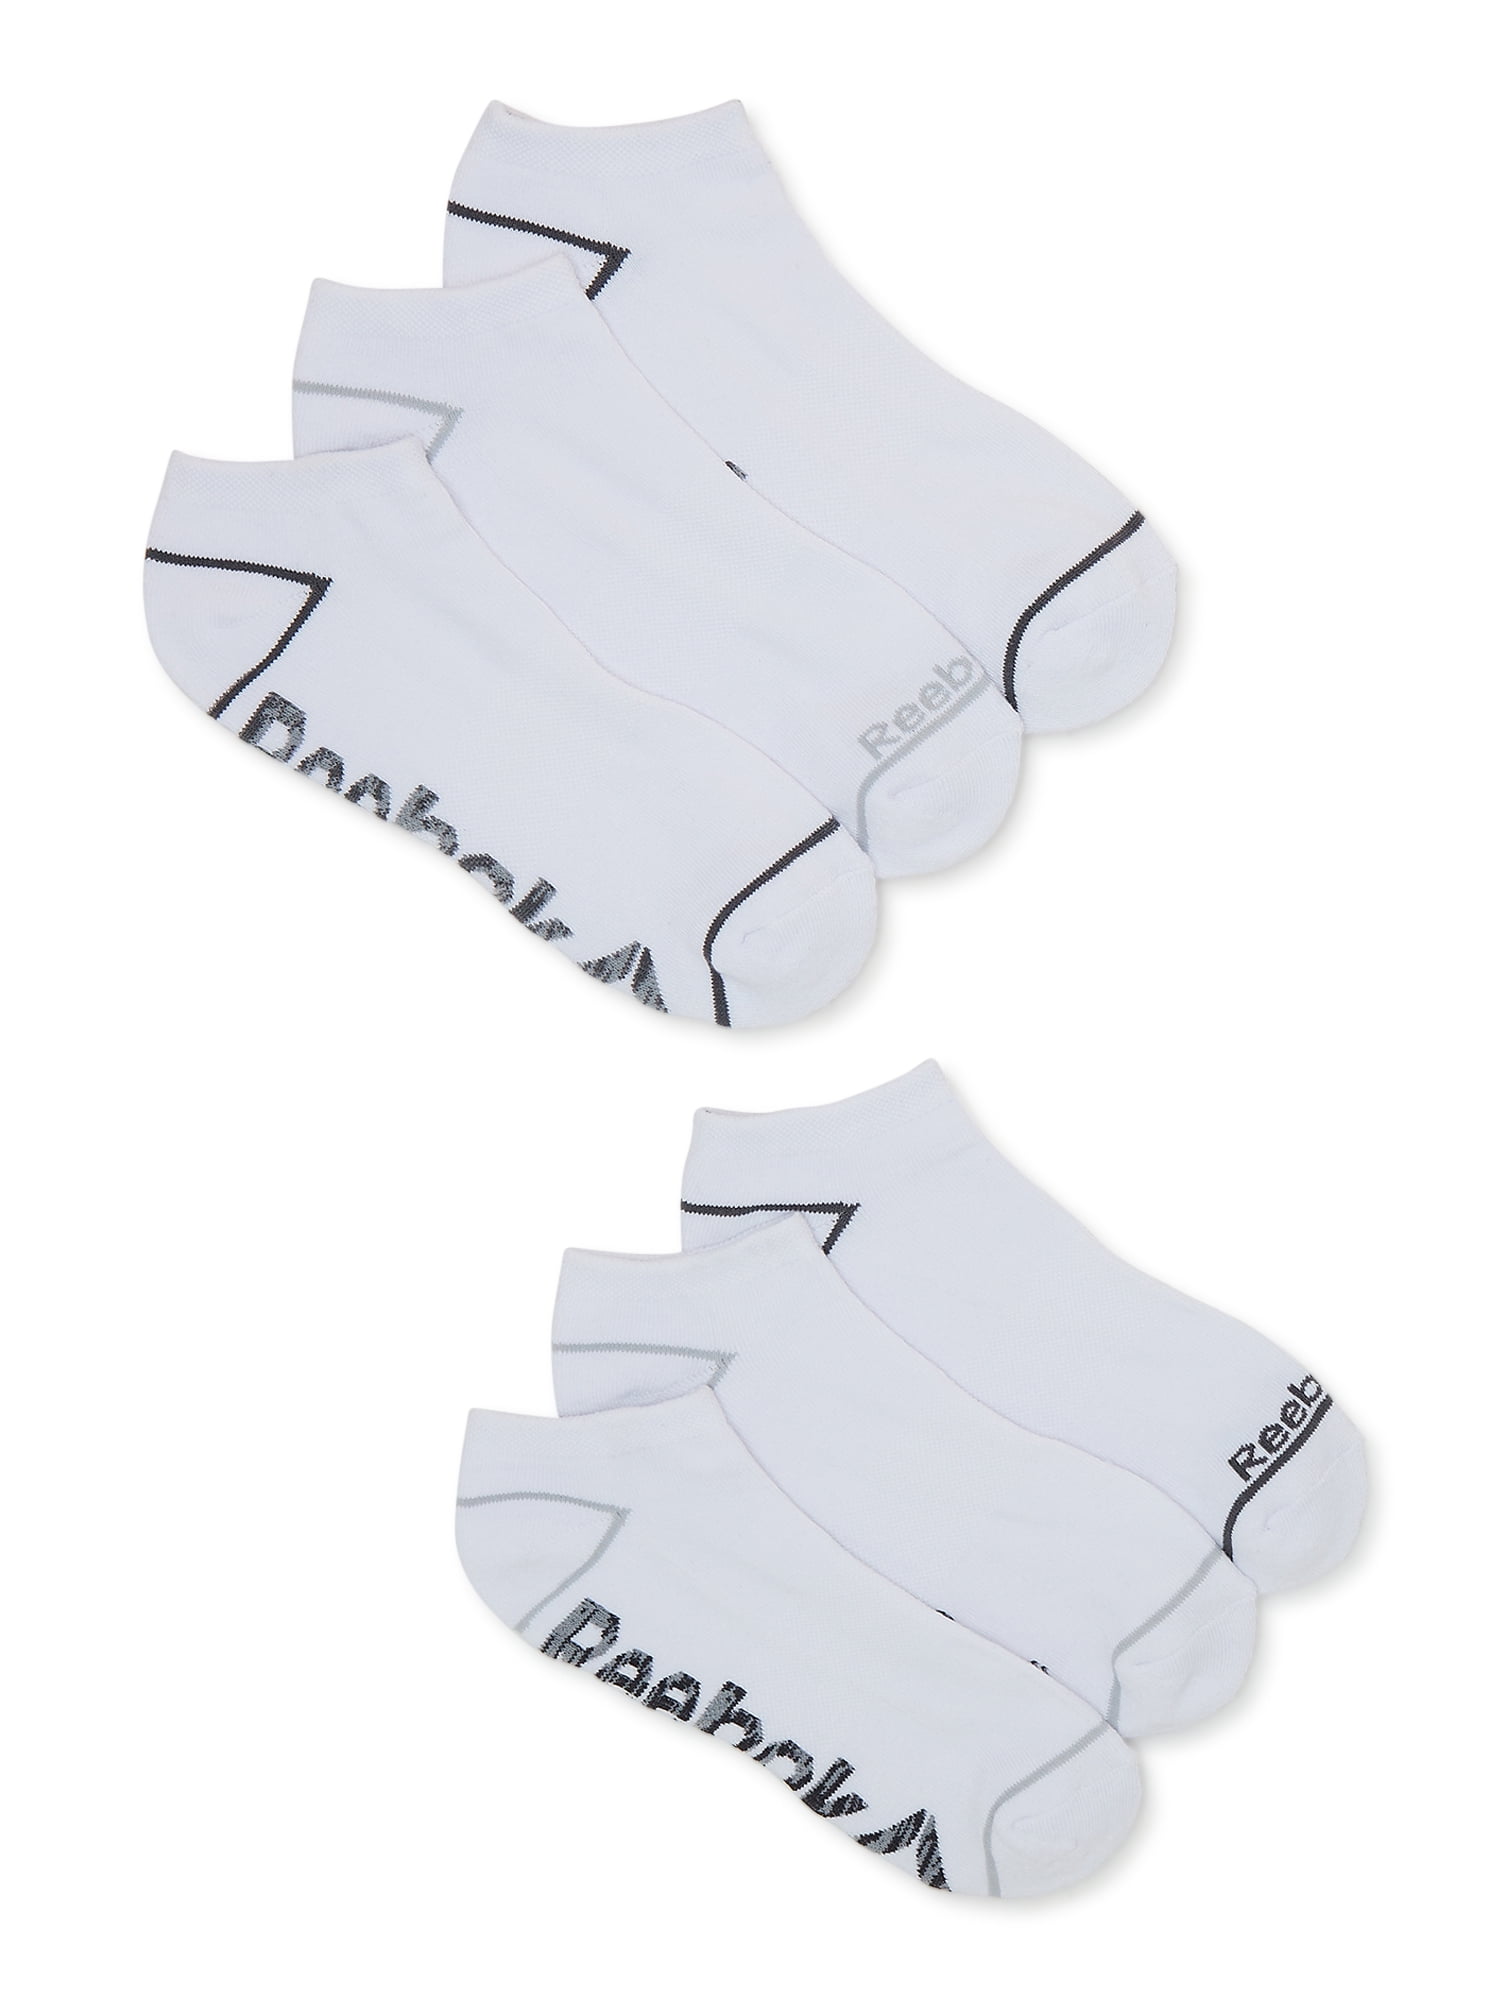 Reebok Men's Pro Series Low Cut Socks, 6-Pack - Walmart.com